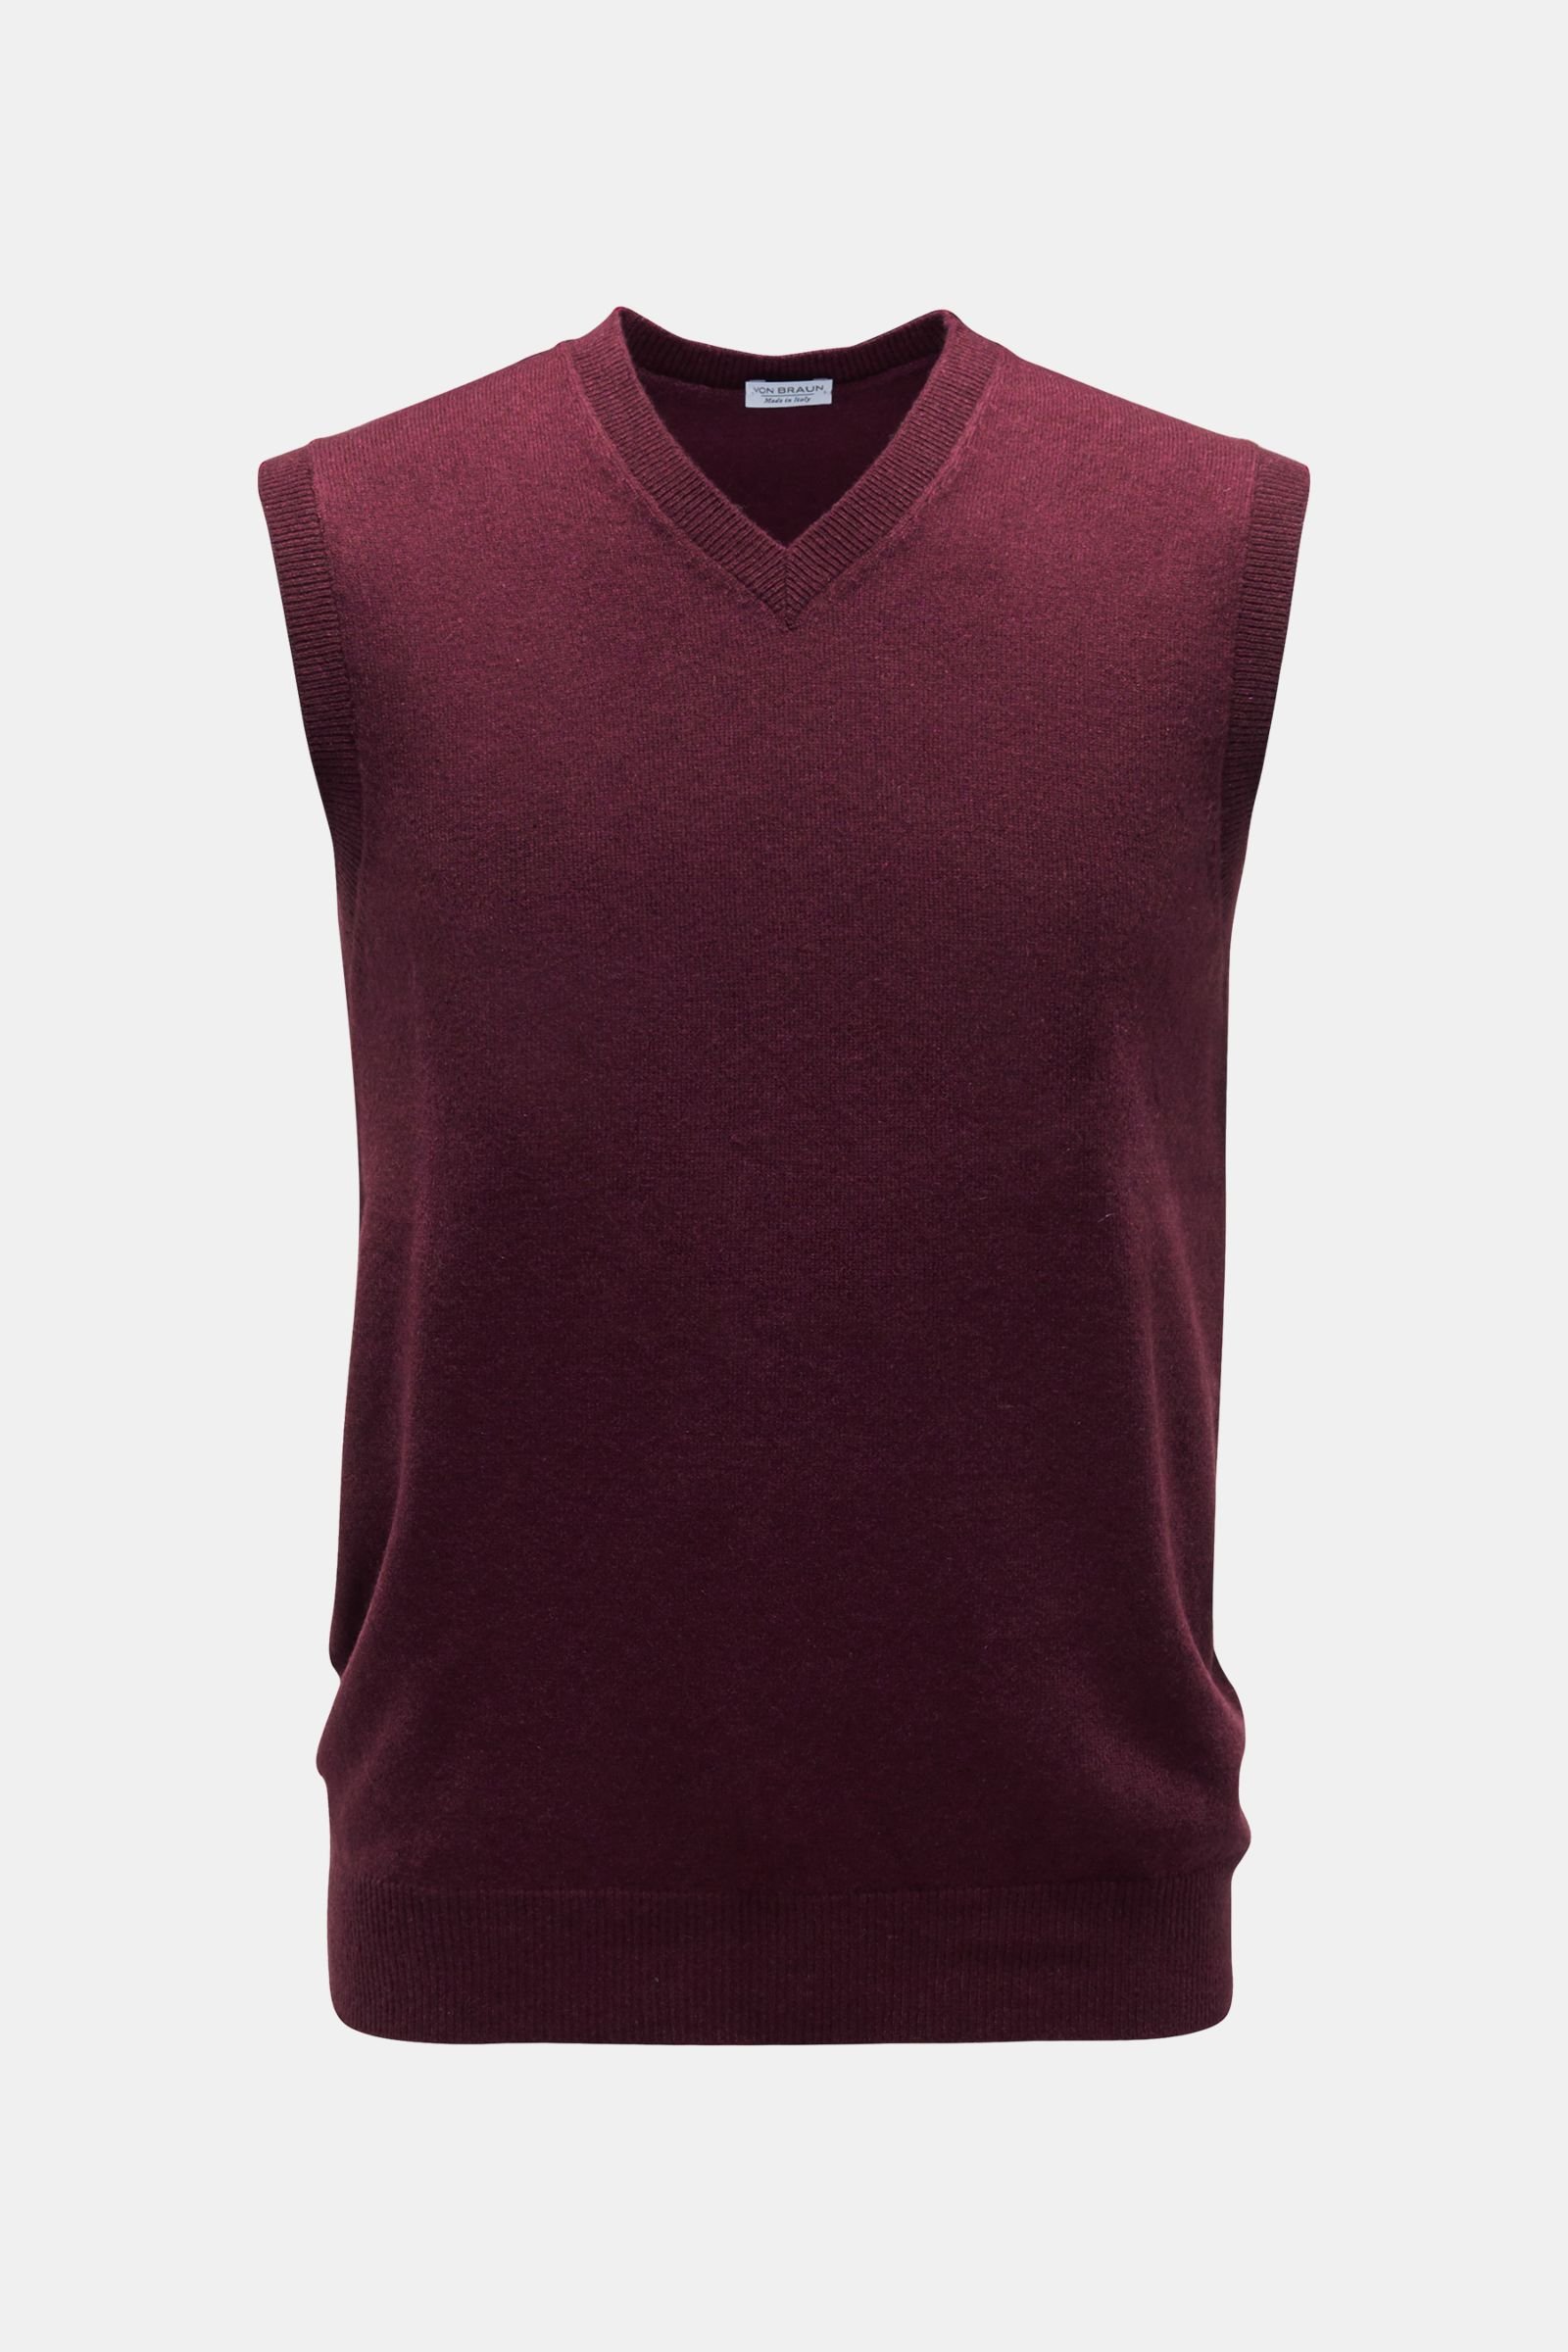 Cashmere V-neck sweater vest burgundy